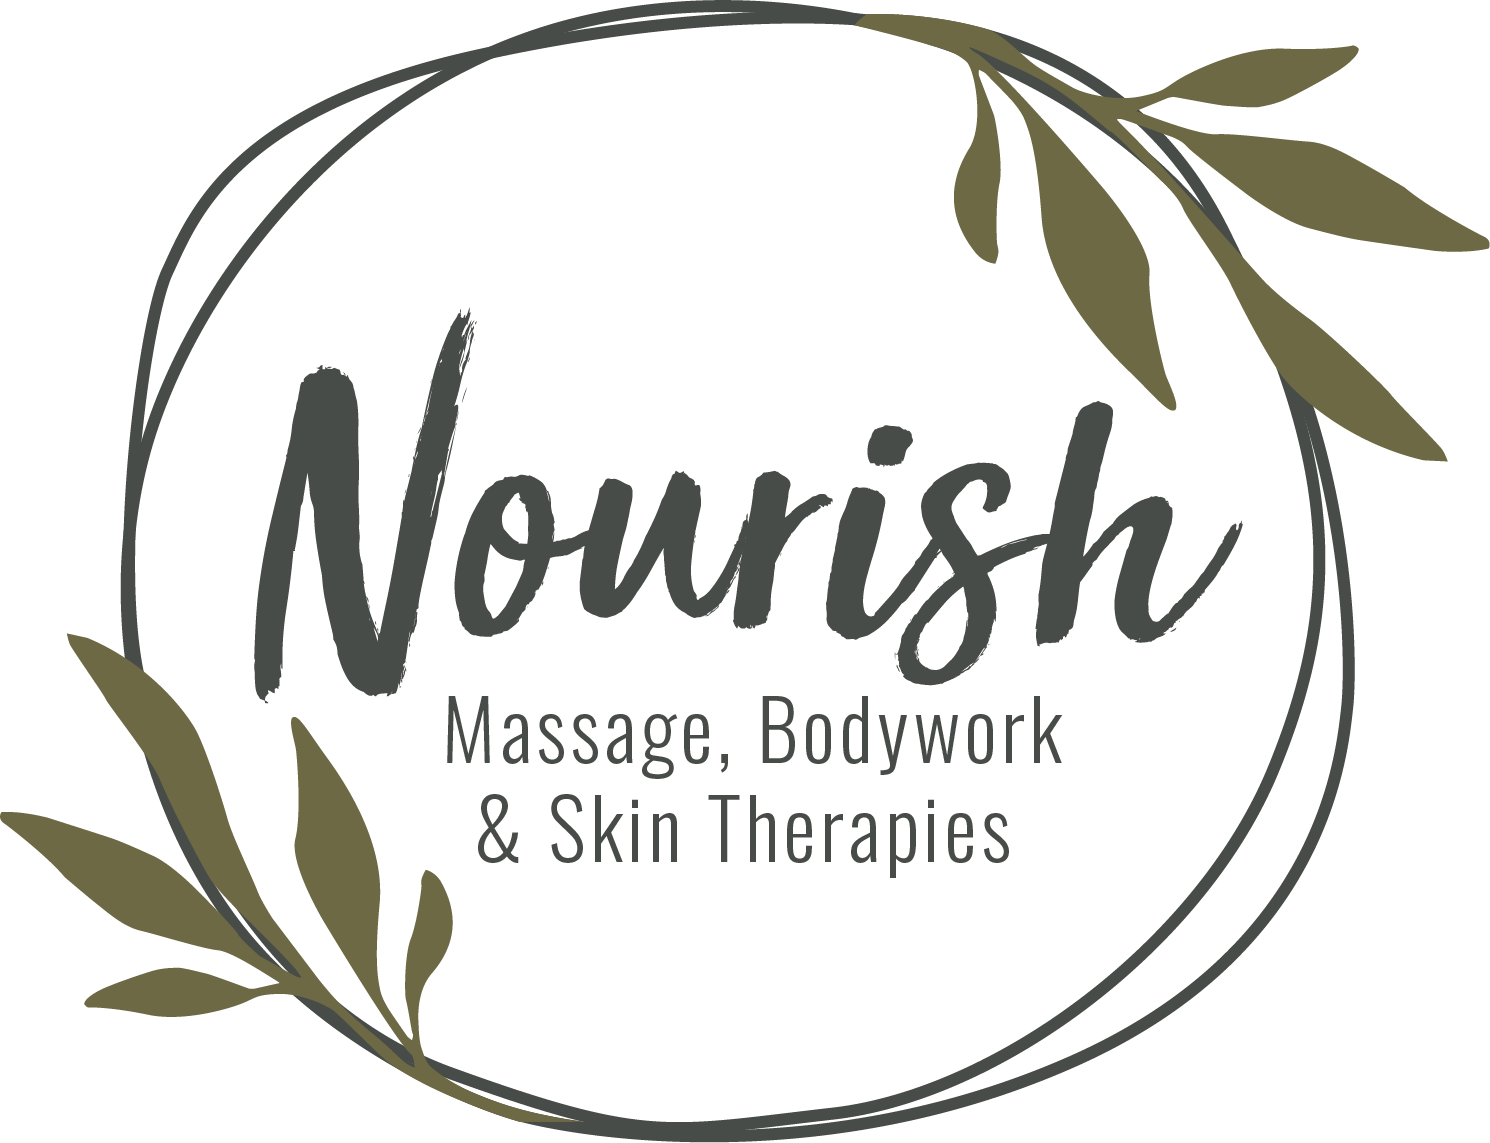 Nourish Massage, Bodywork, & Skin Therapies